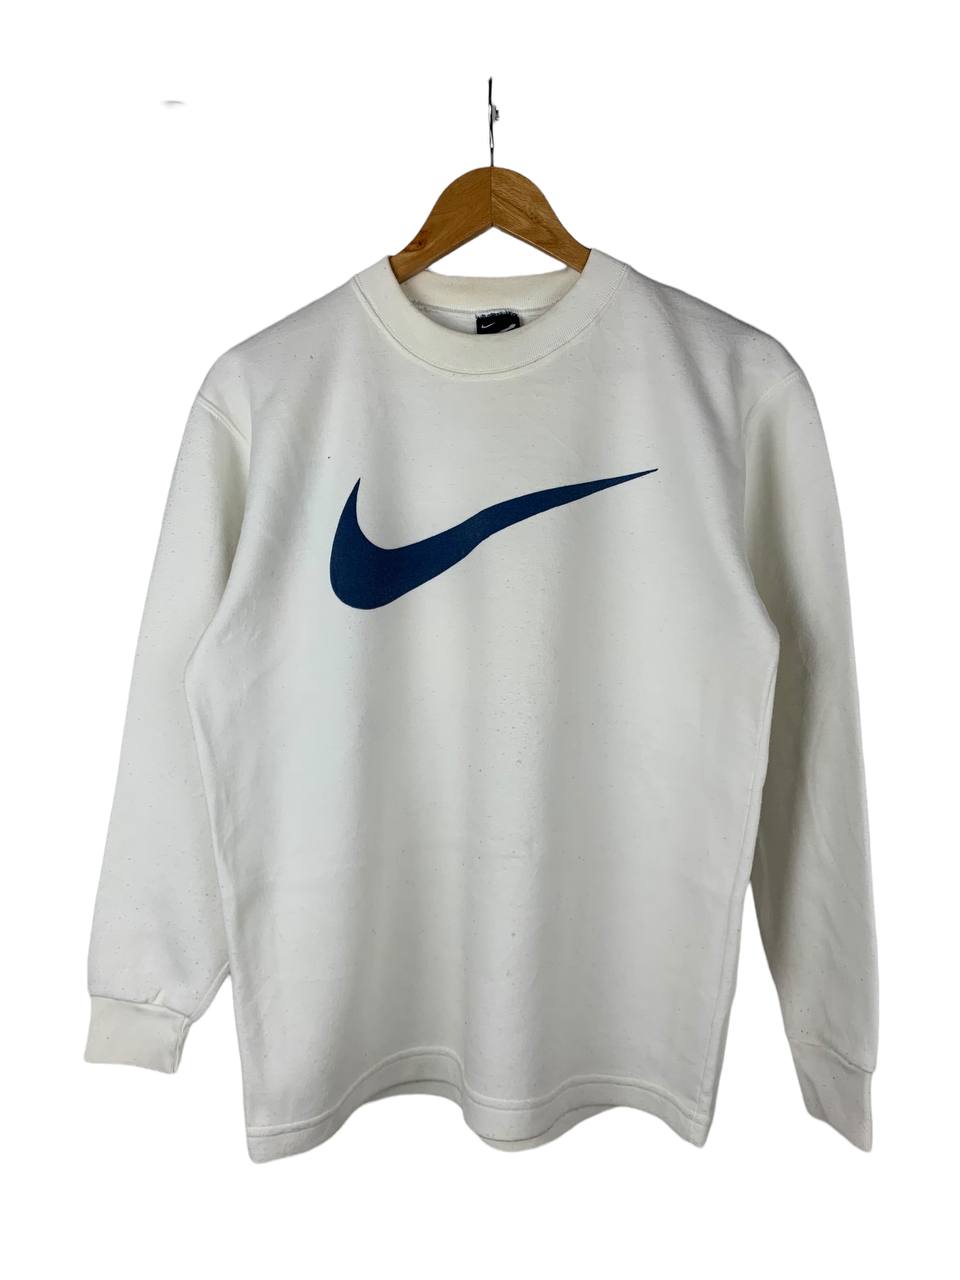 Vintage Nike Agassi Swoosh Logo Sweatshirt - 1